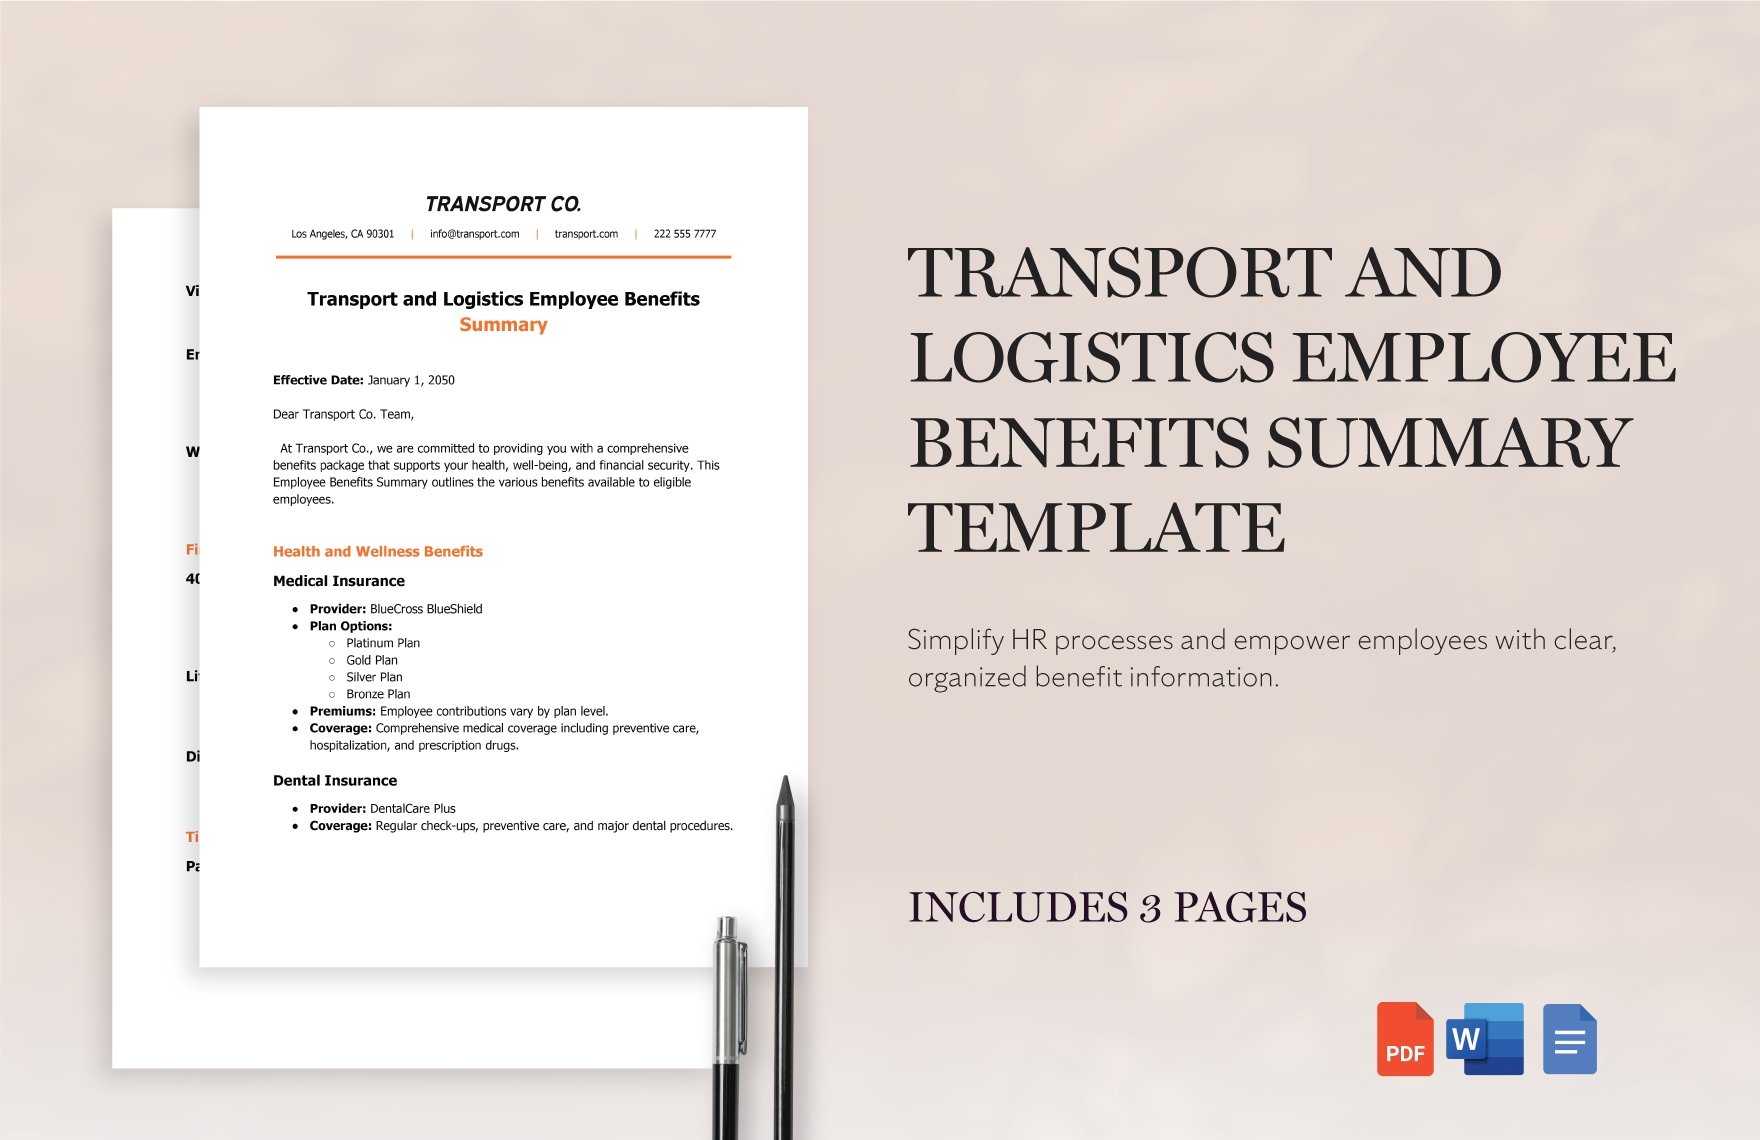 Transport and Logistics Employee Benefits Summary Template